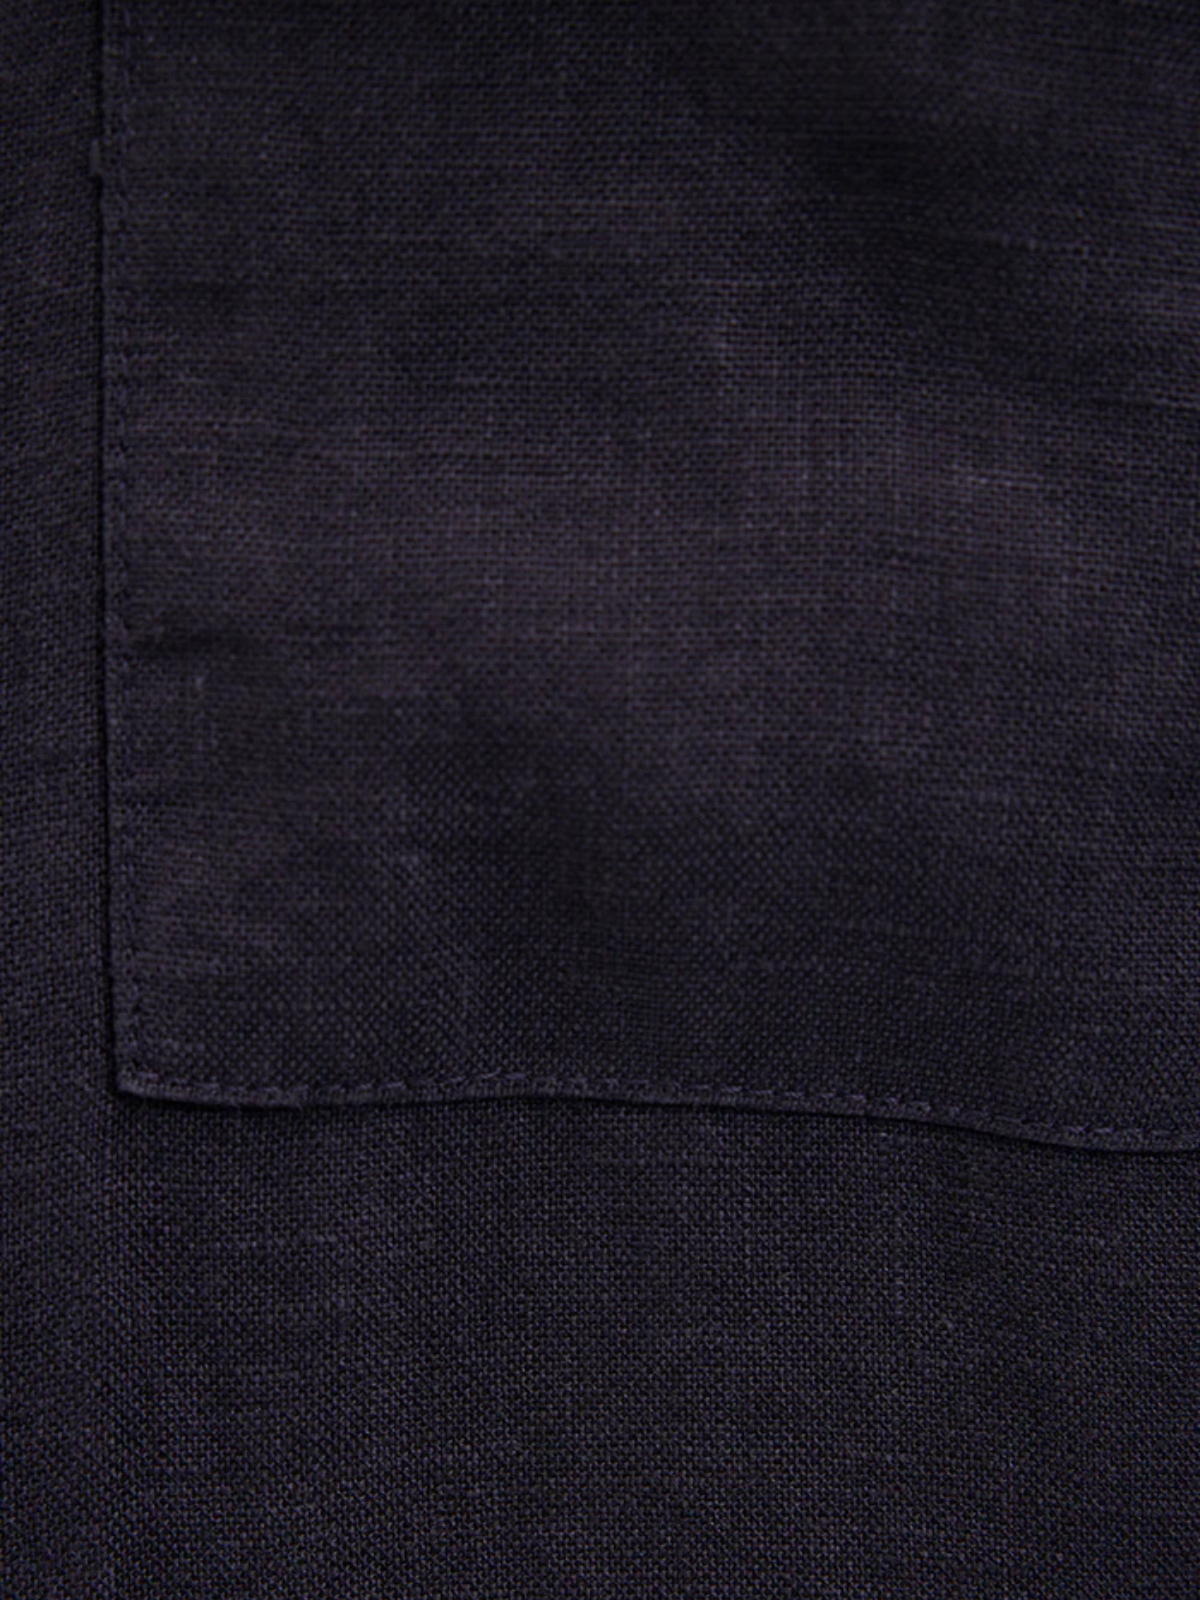 mavi two pocket ls long sleeve shirt 100% linen periscope black kempt athens ga georgia men's clothing store